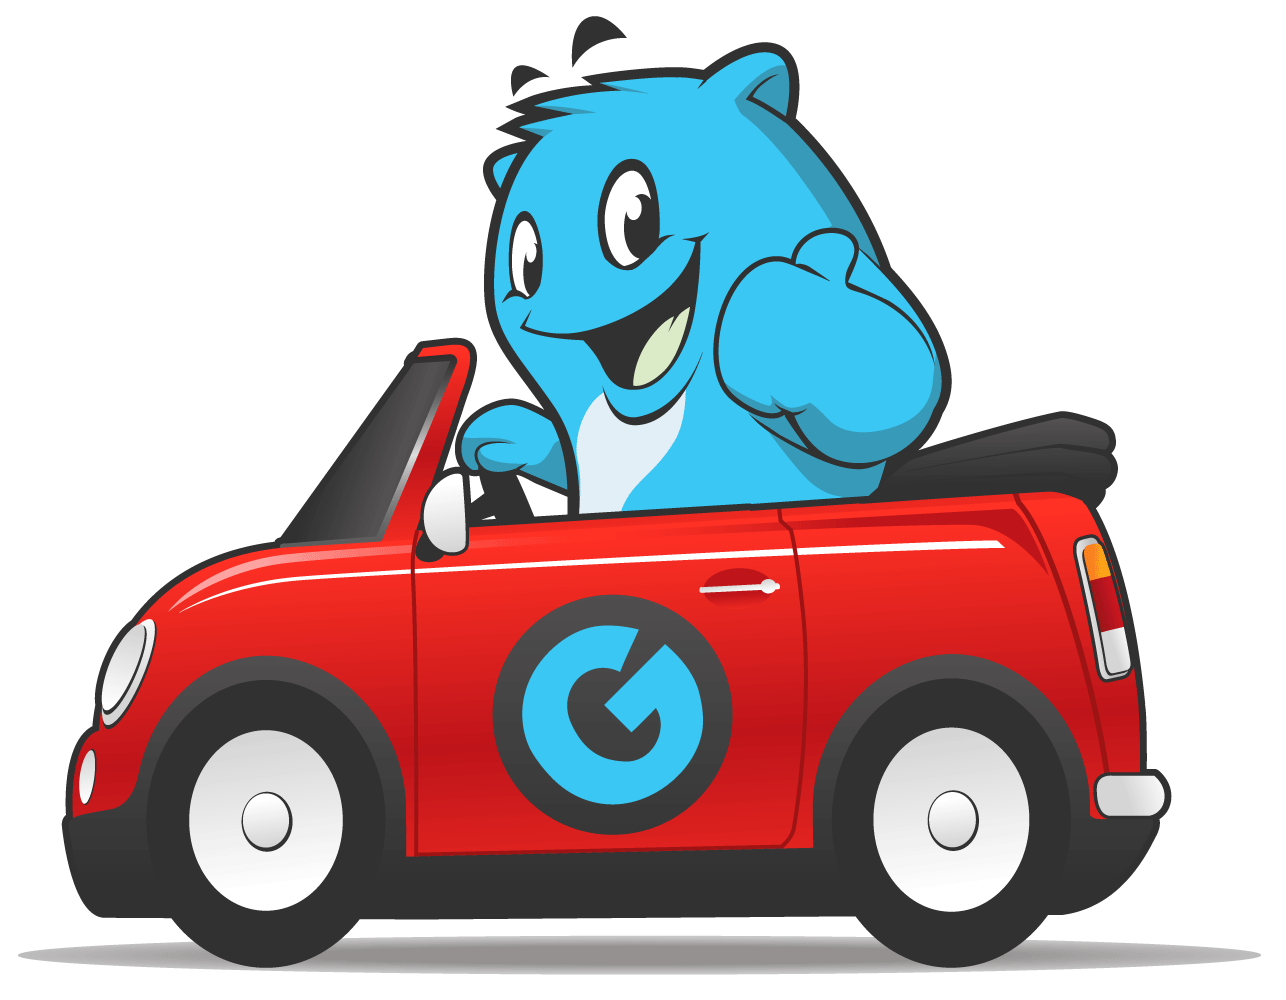 Free Cartoon Car Driving, Download Free Cartoon Car Driving png images